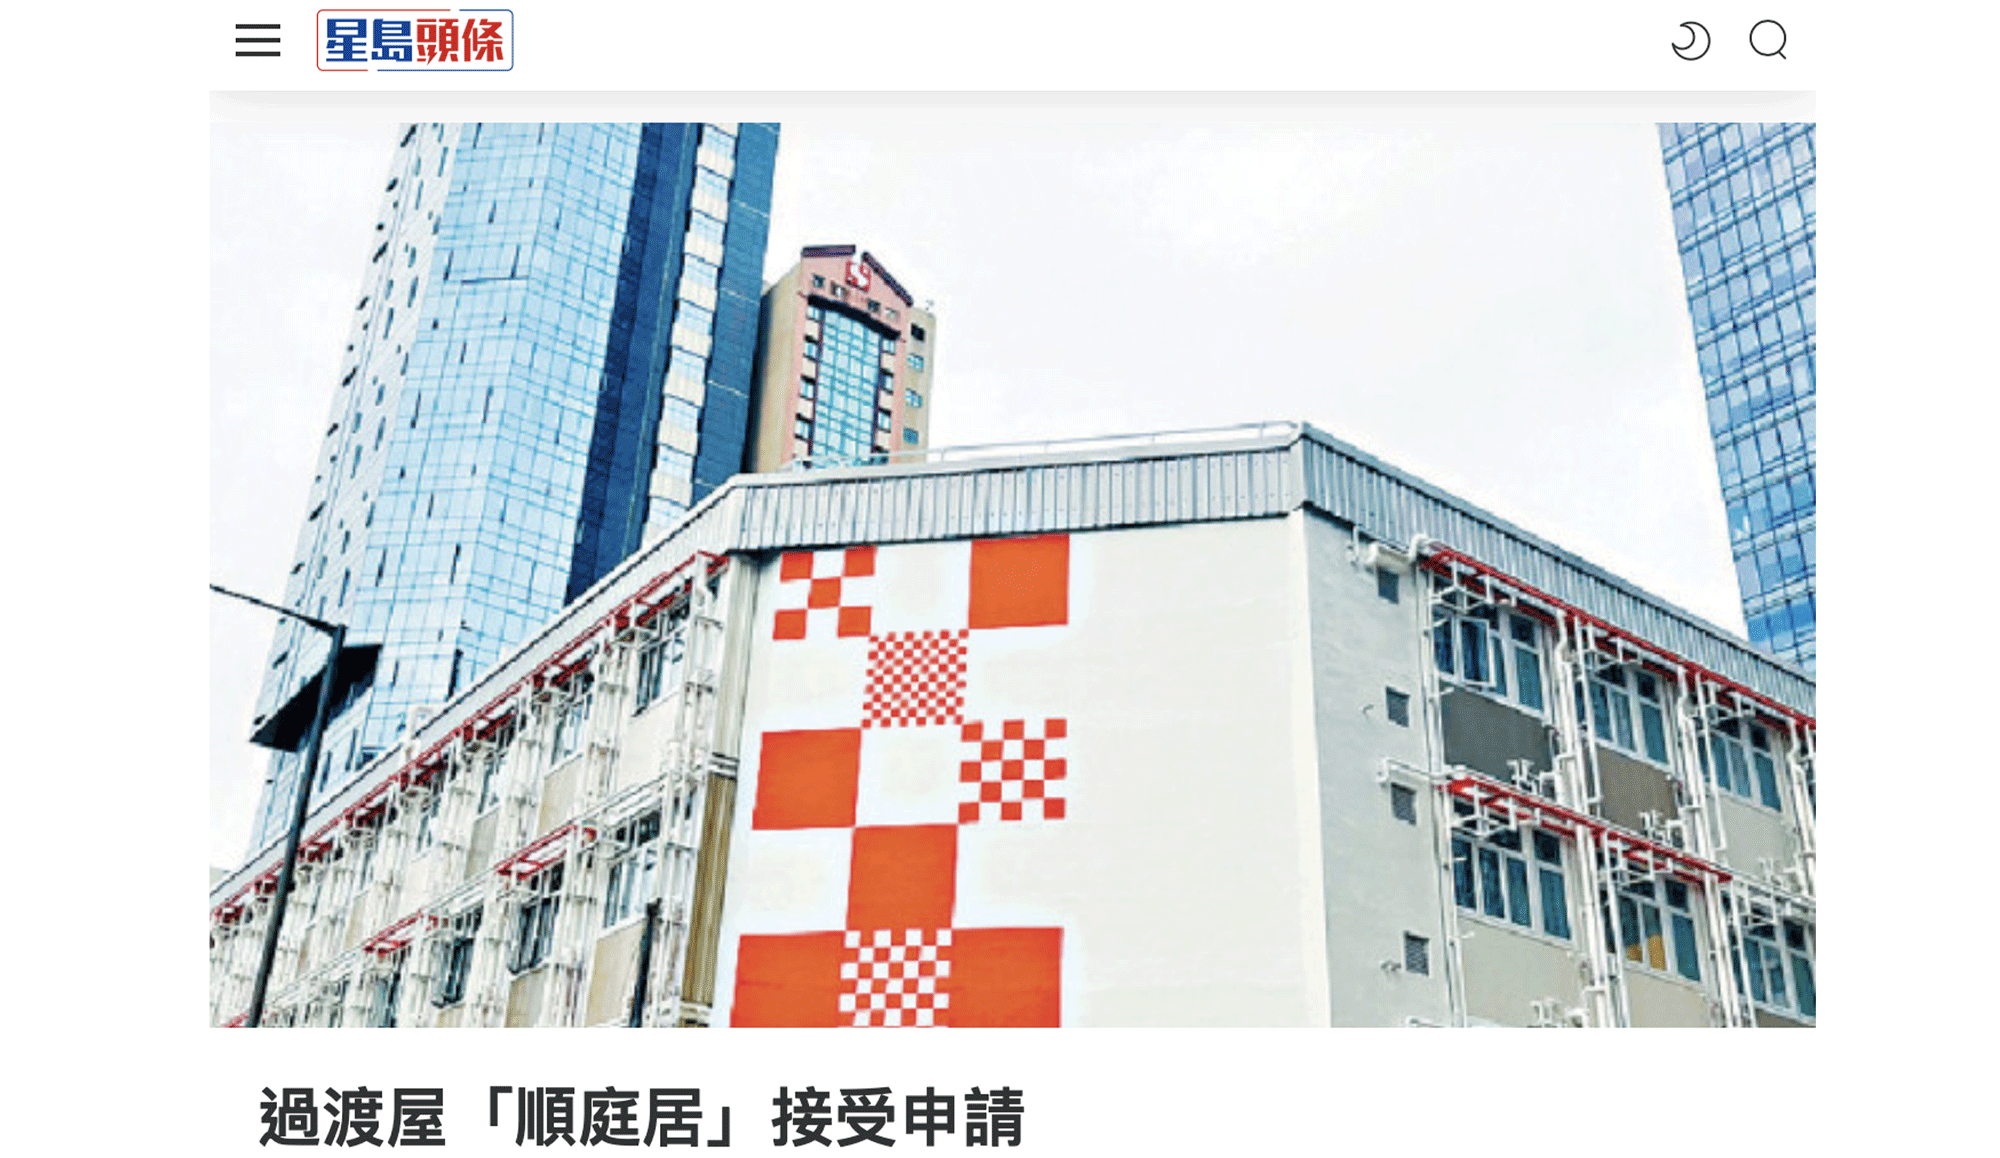 Cover Image - Singtao Headline - Social Housing Project - Cheung Sha Wan “Shun Ting Terraced Home” 2023/04/17